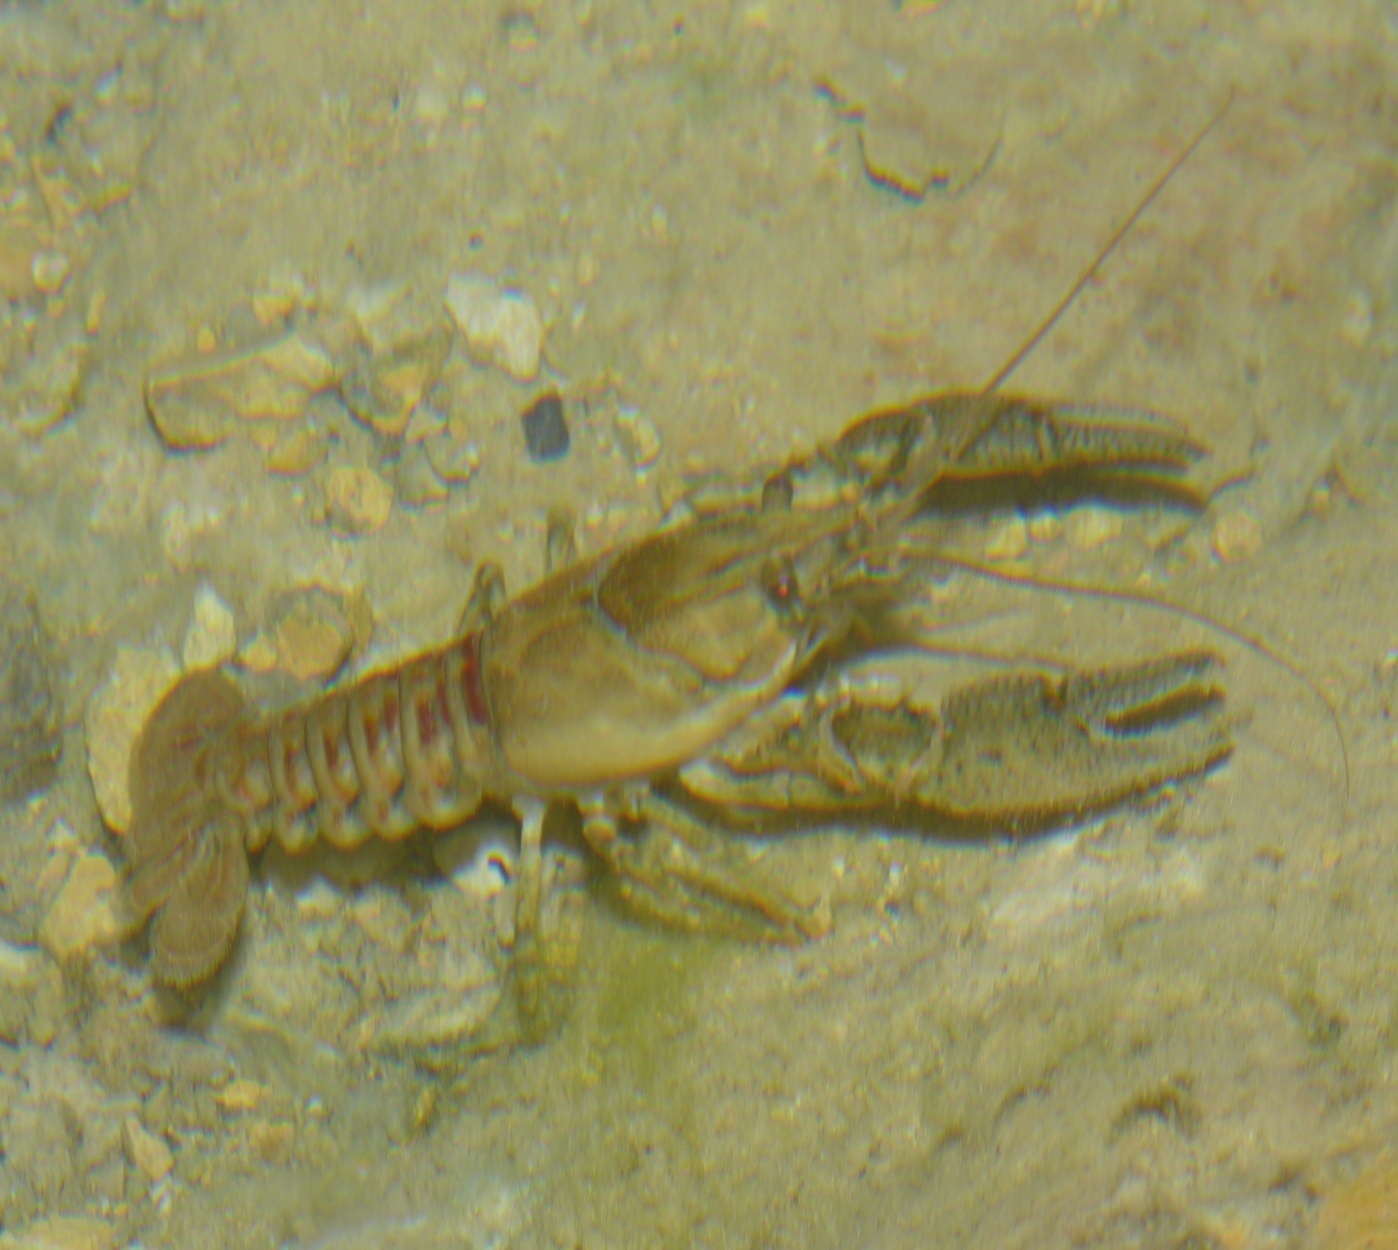 Image of spiny-cheek crayfish